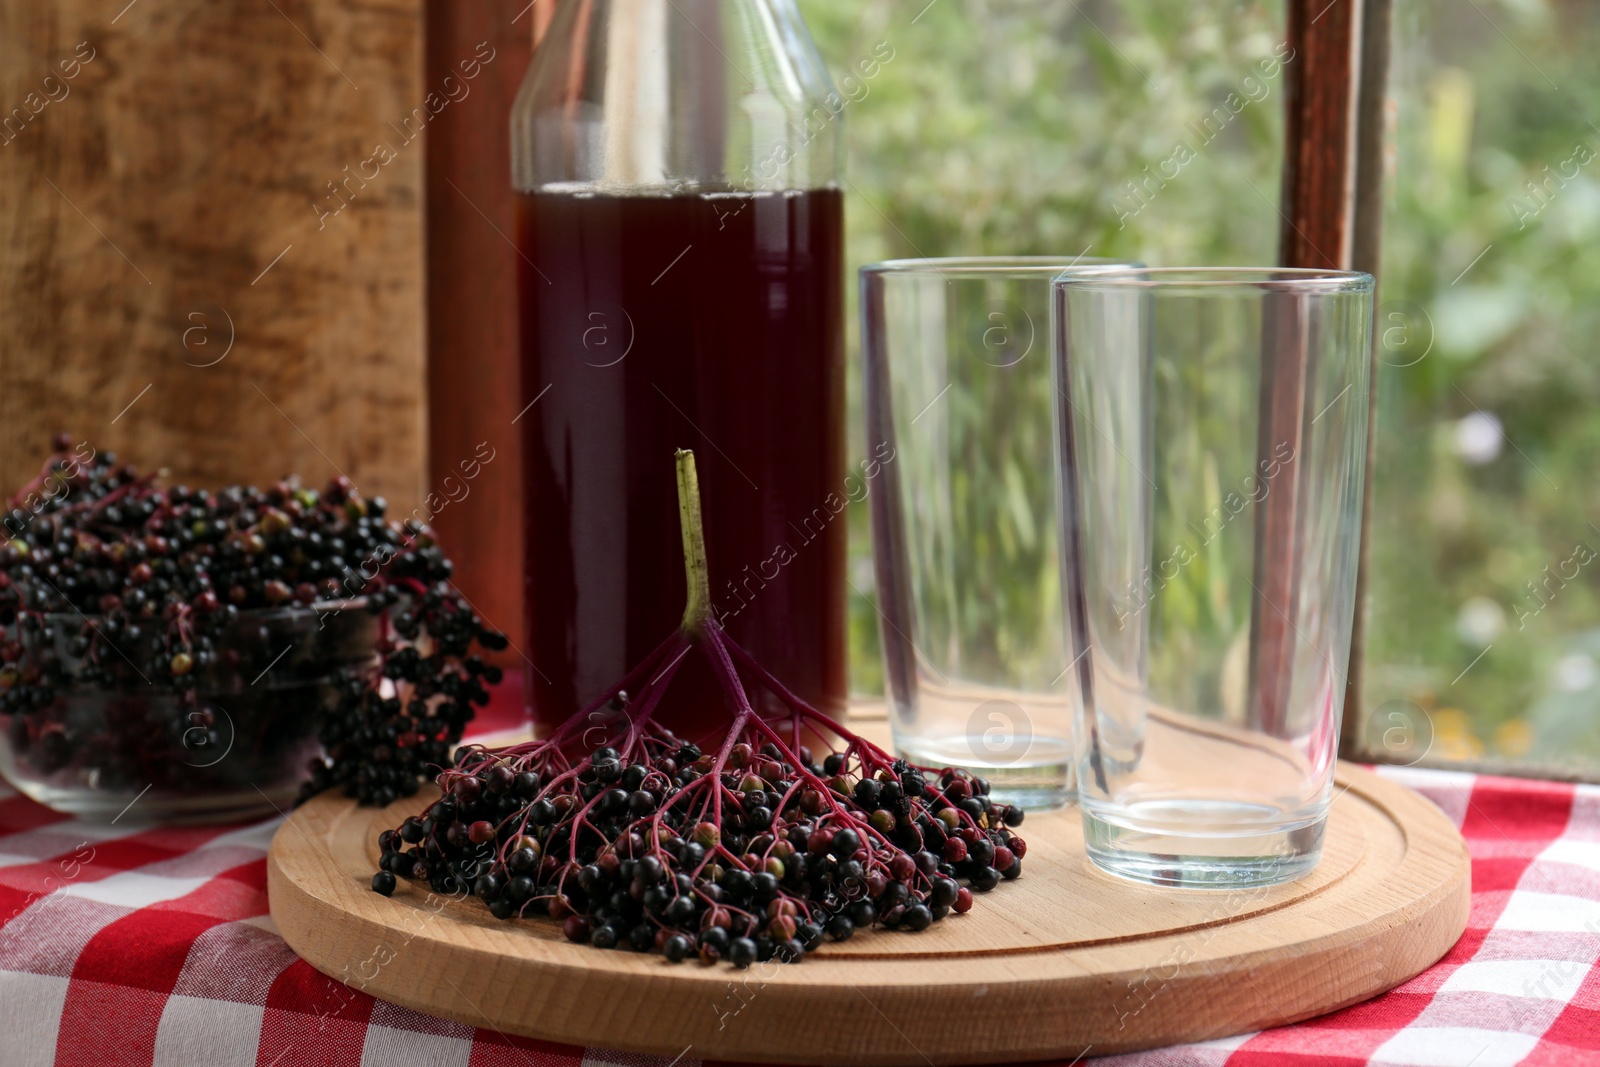 Photo of Elderberry drink and Sambucus berries on table near window